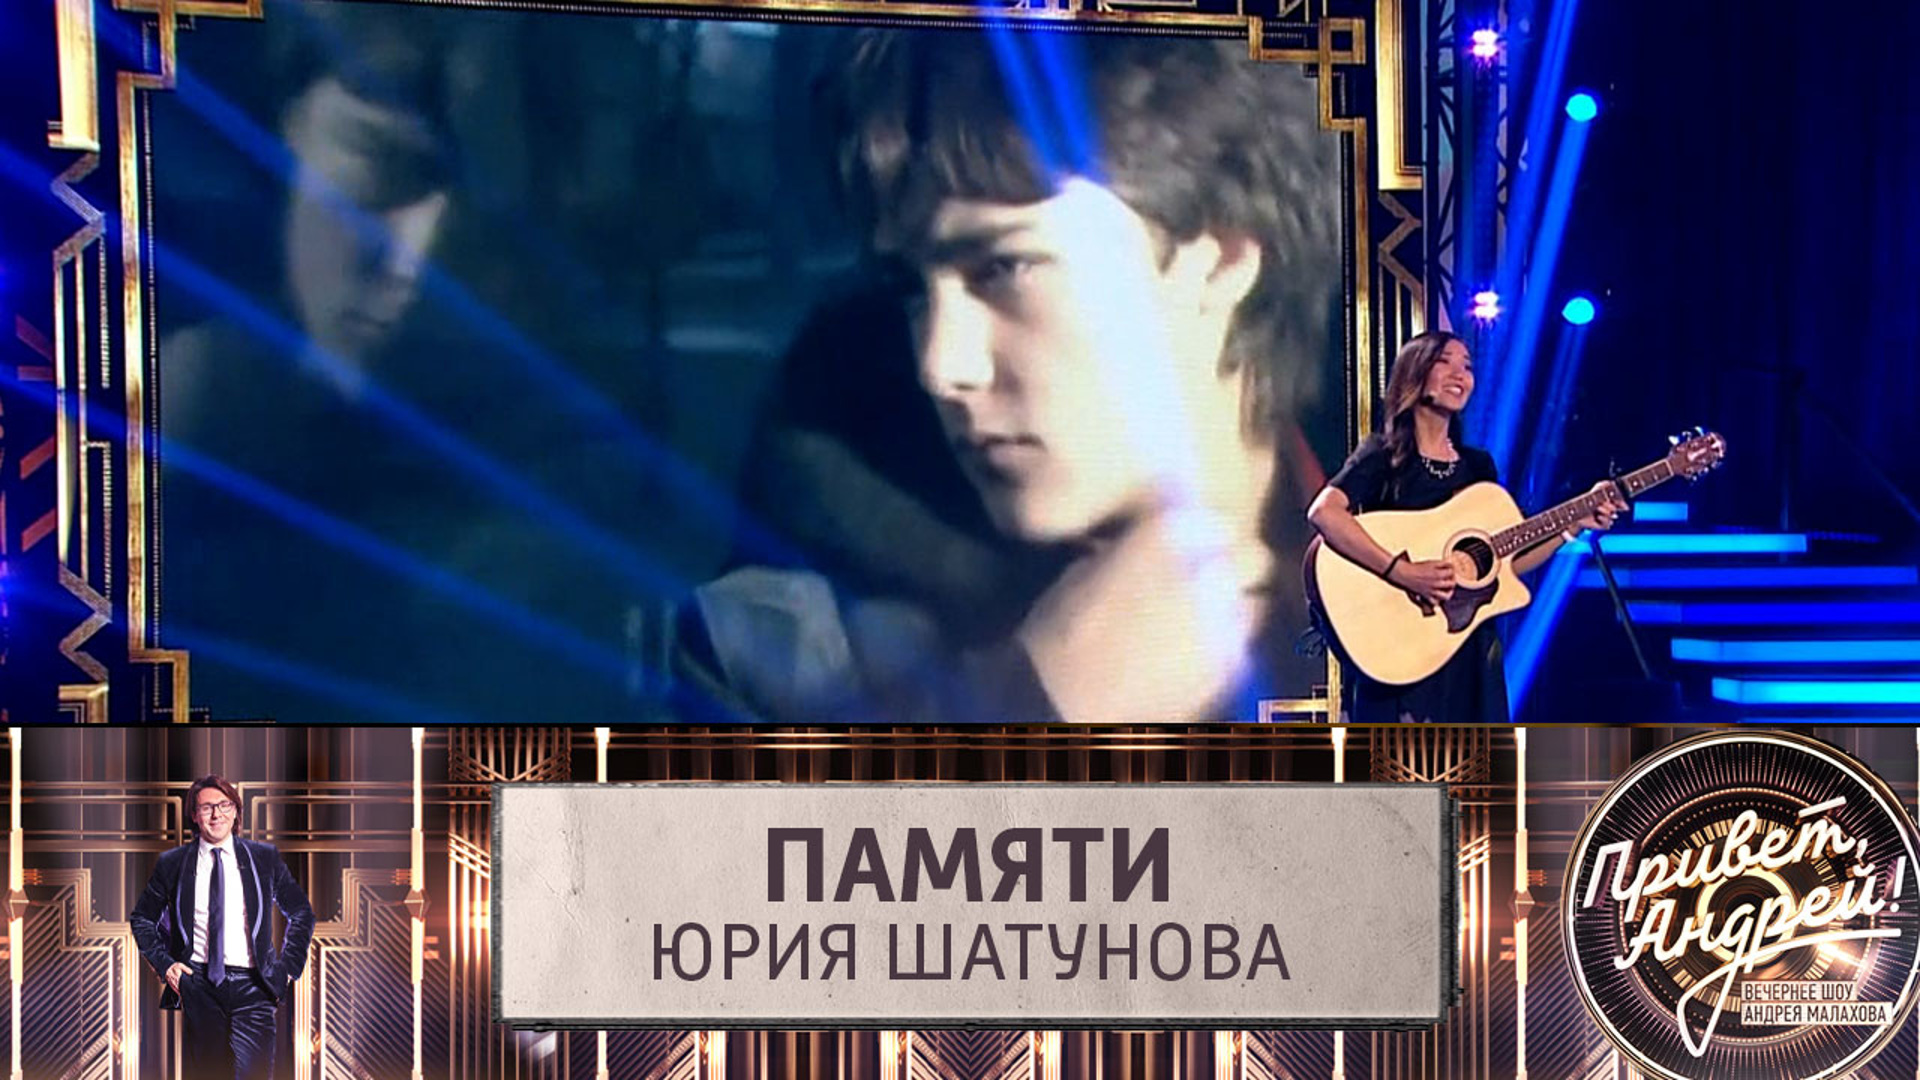 Песня шамана на концерте памяти шатунова